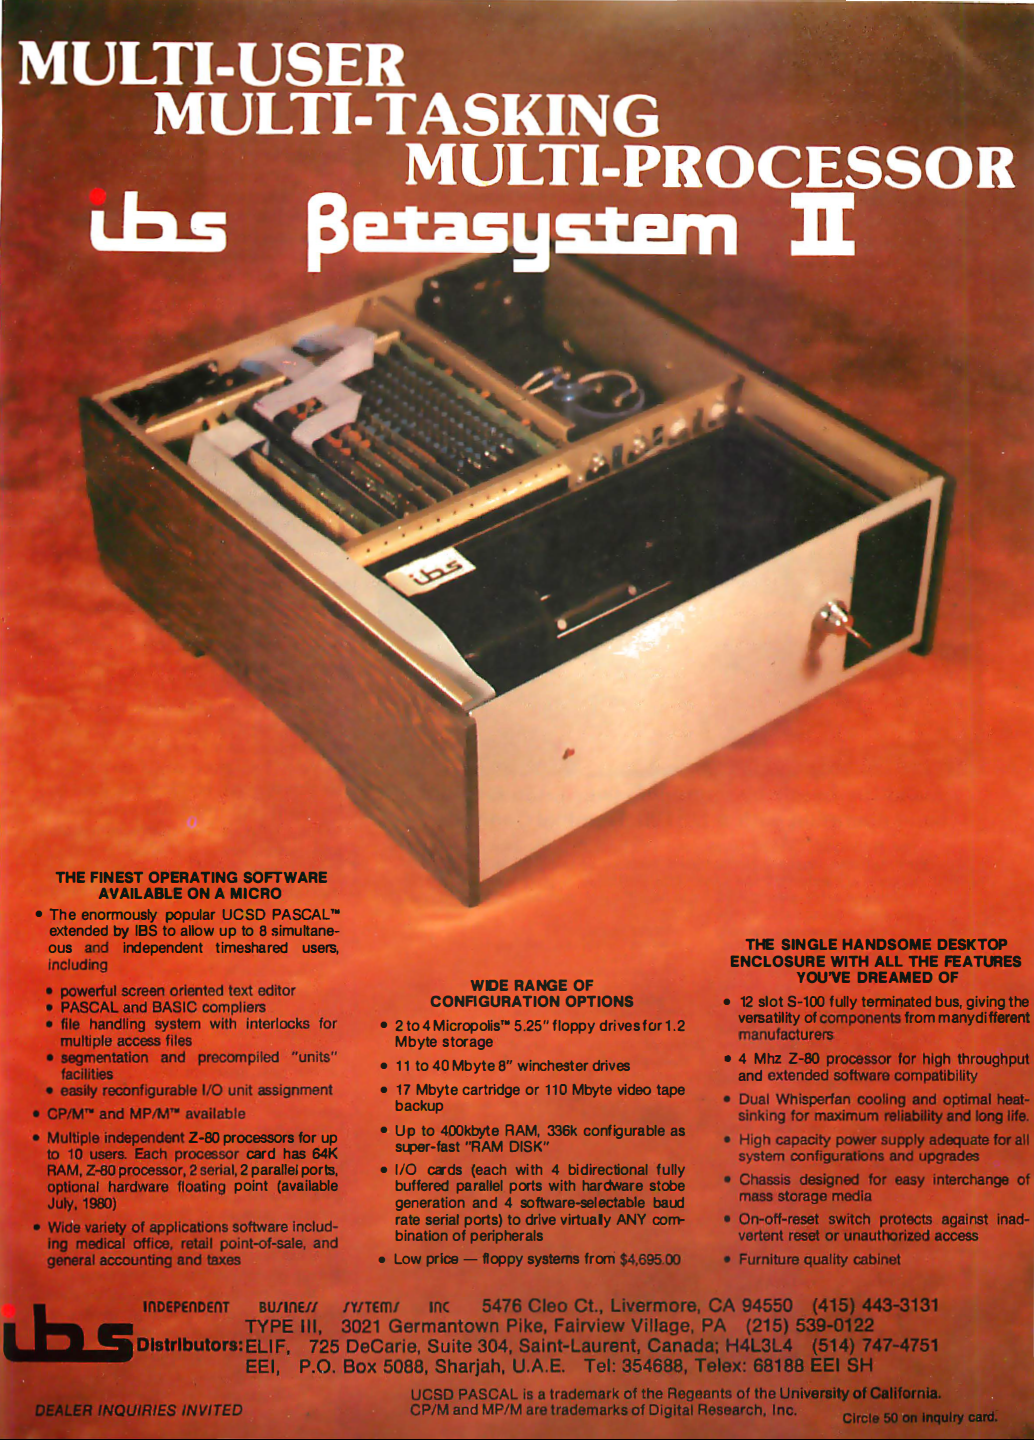 Betasystem II